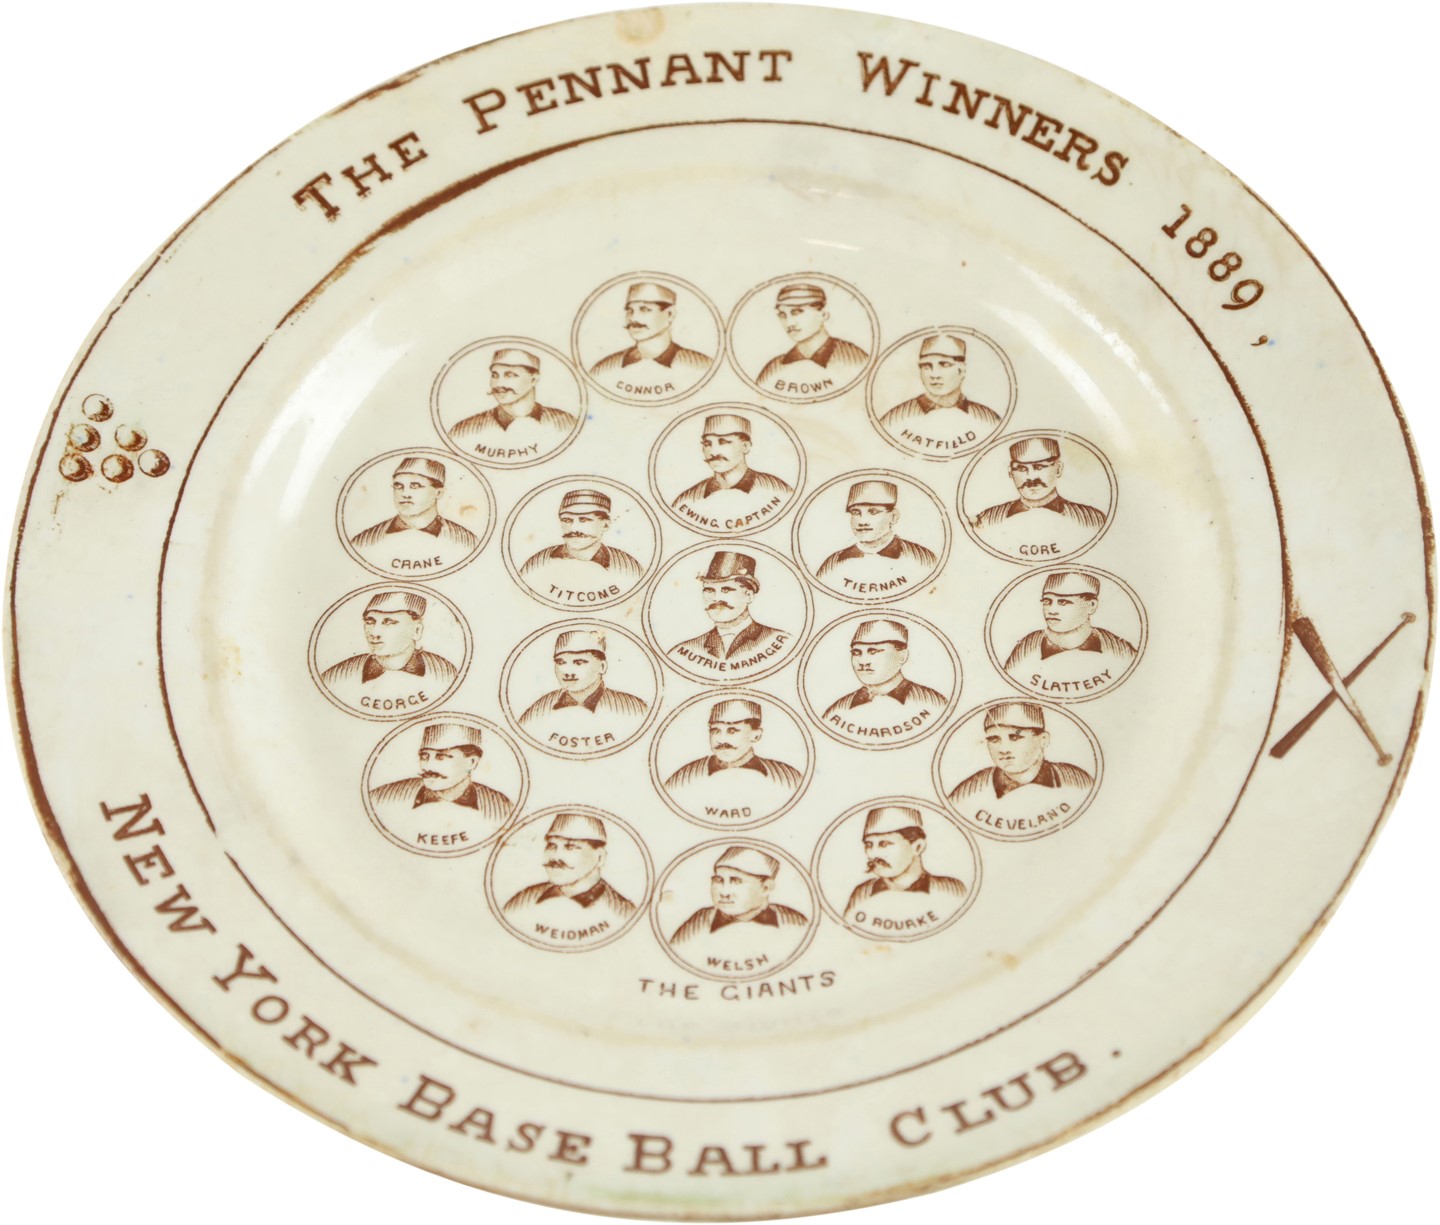 Baseball Memorabilia - 1889 New York Baseball Club Pennant Winners Plate